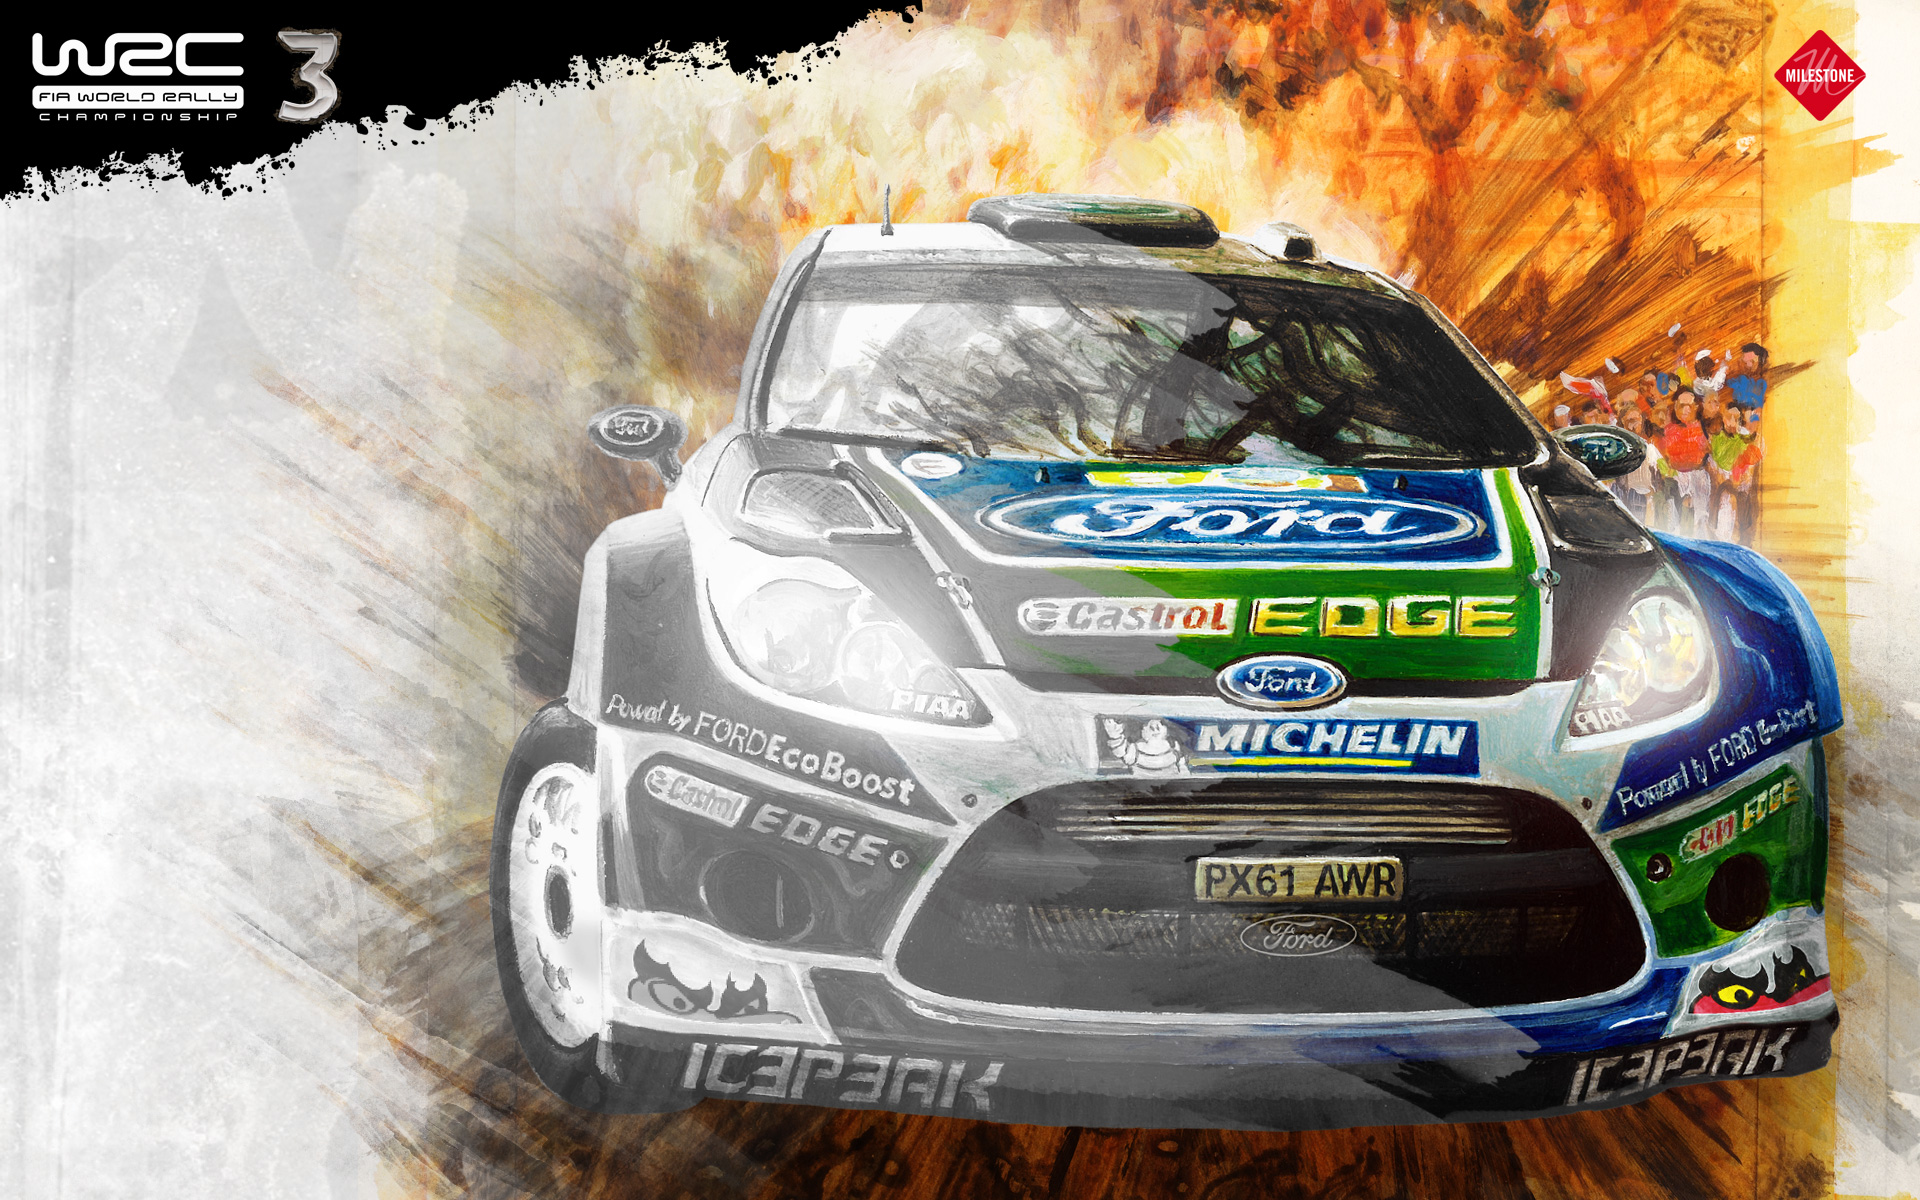 Wallpaper Image Wrc 3 Fia World Rally Championship Mod Db